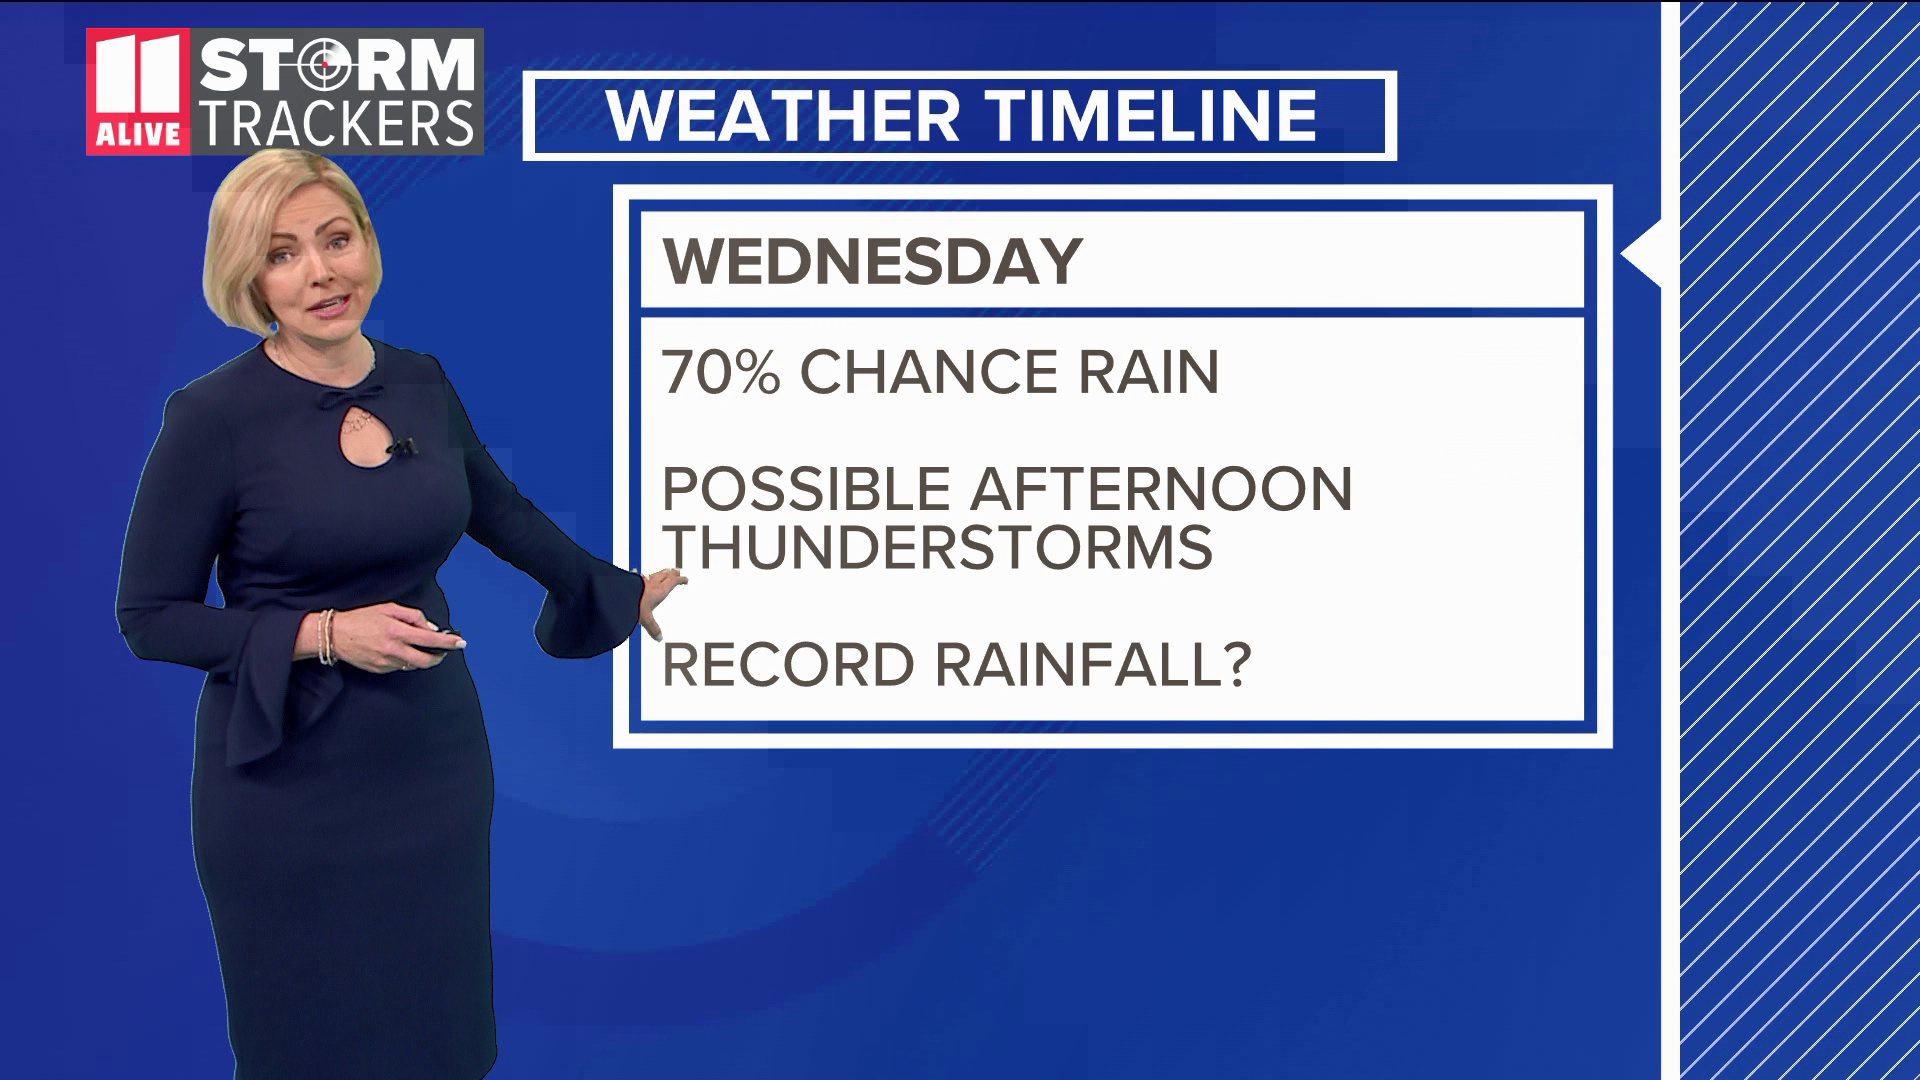 11Alive StormTracker meteorologist Samantha Mohr breaks down the chances of rain for the week.